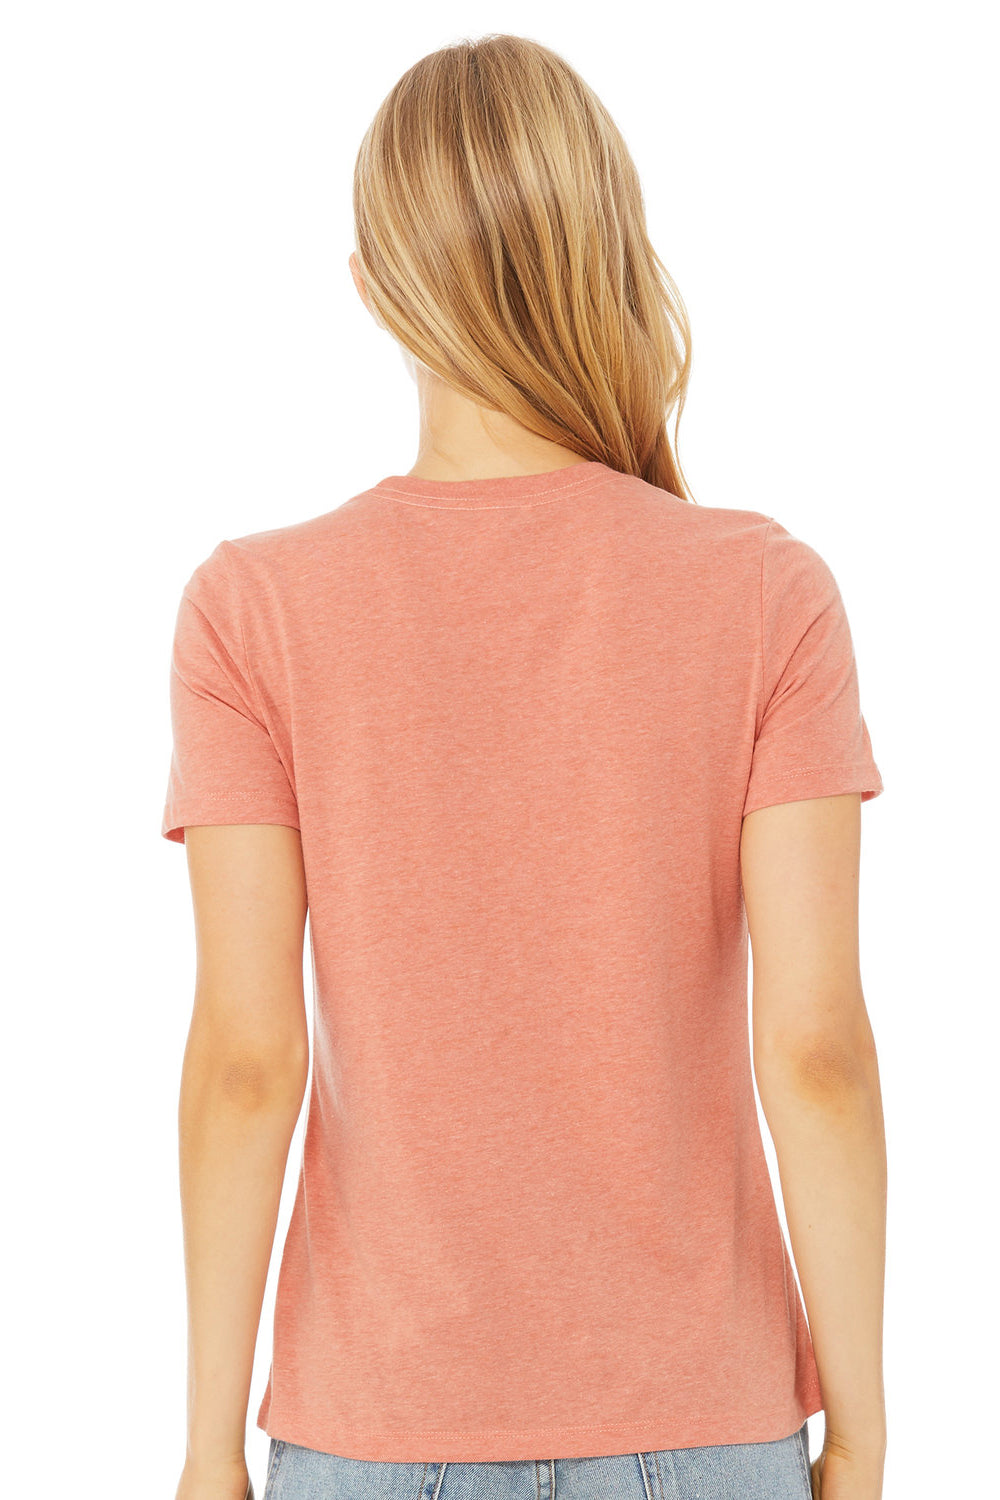 Bella + Canvas BC6400CVC/6400CVC Womens CVC Short Sleeve Crewneck T-Shirt Heather Sunset Orange Model Back